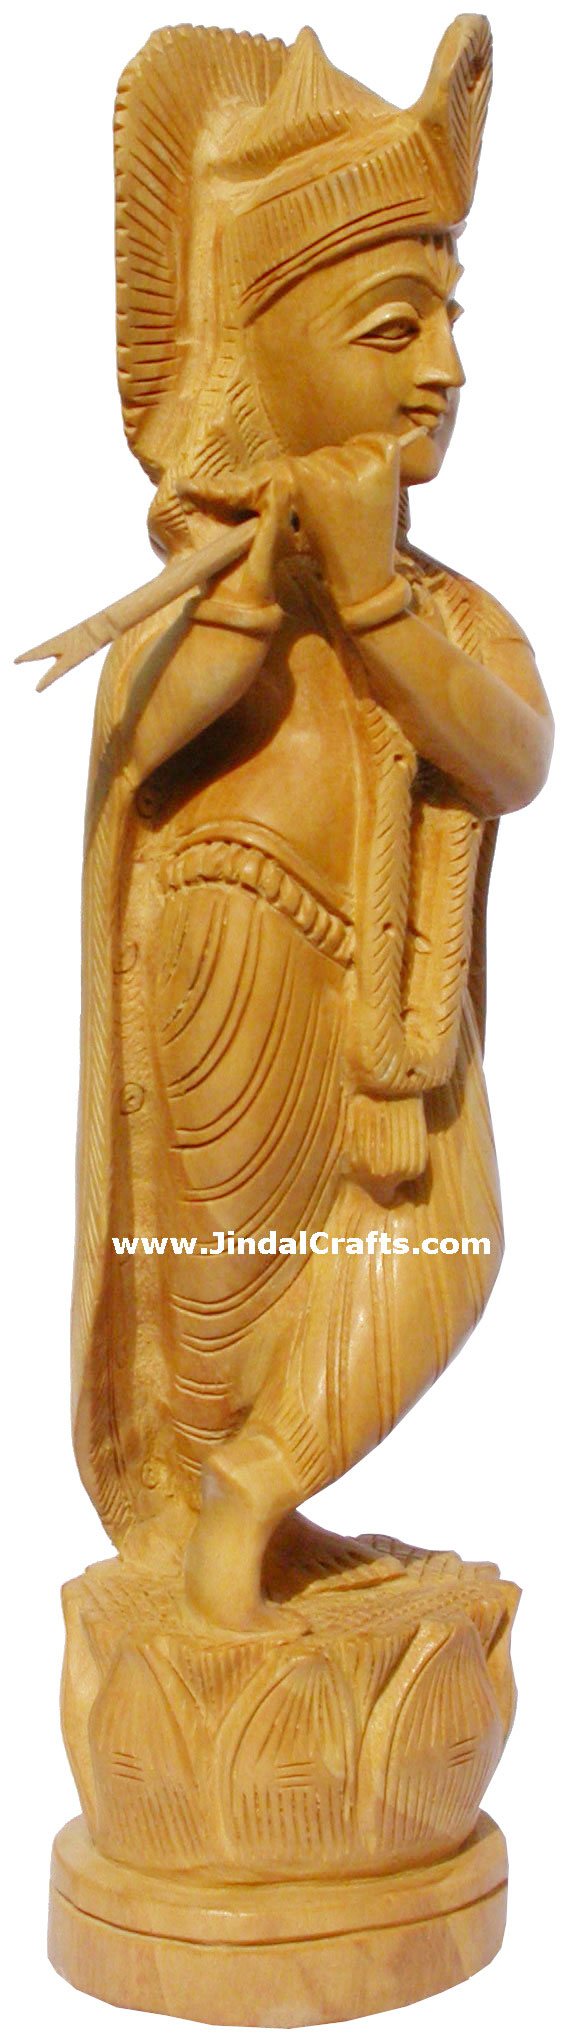 Handmade Wood Sculpture Lord Krishna Hindu Religious Art India God Idols Statues